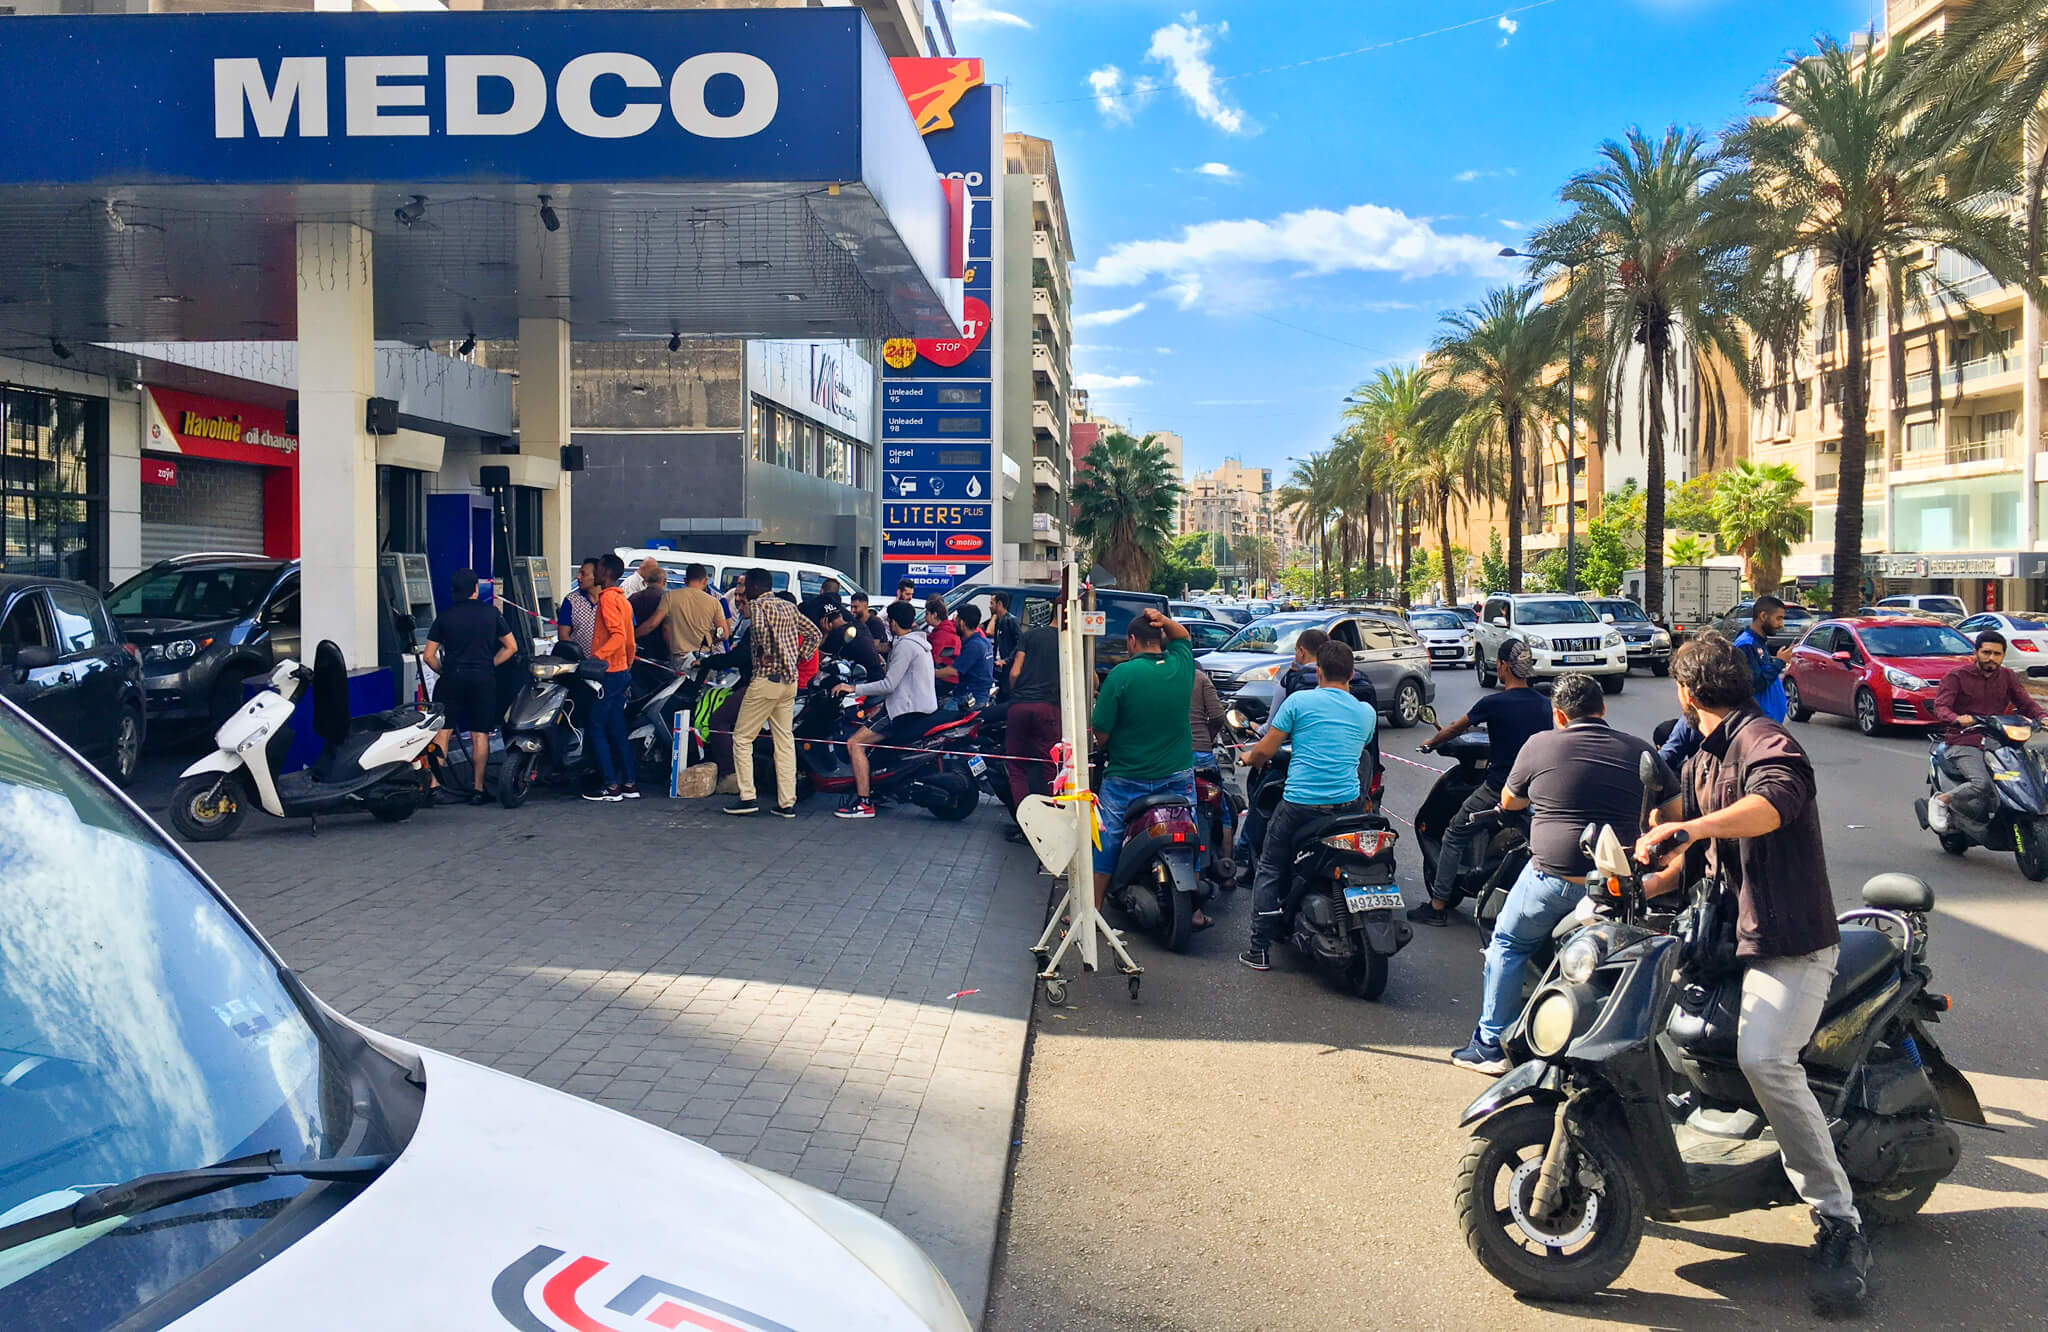 Queue of motorbikes at a MEDCO fuel station